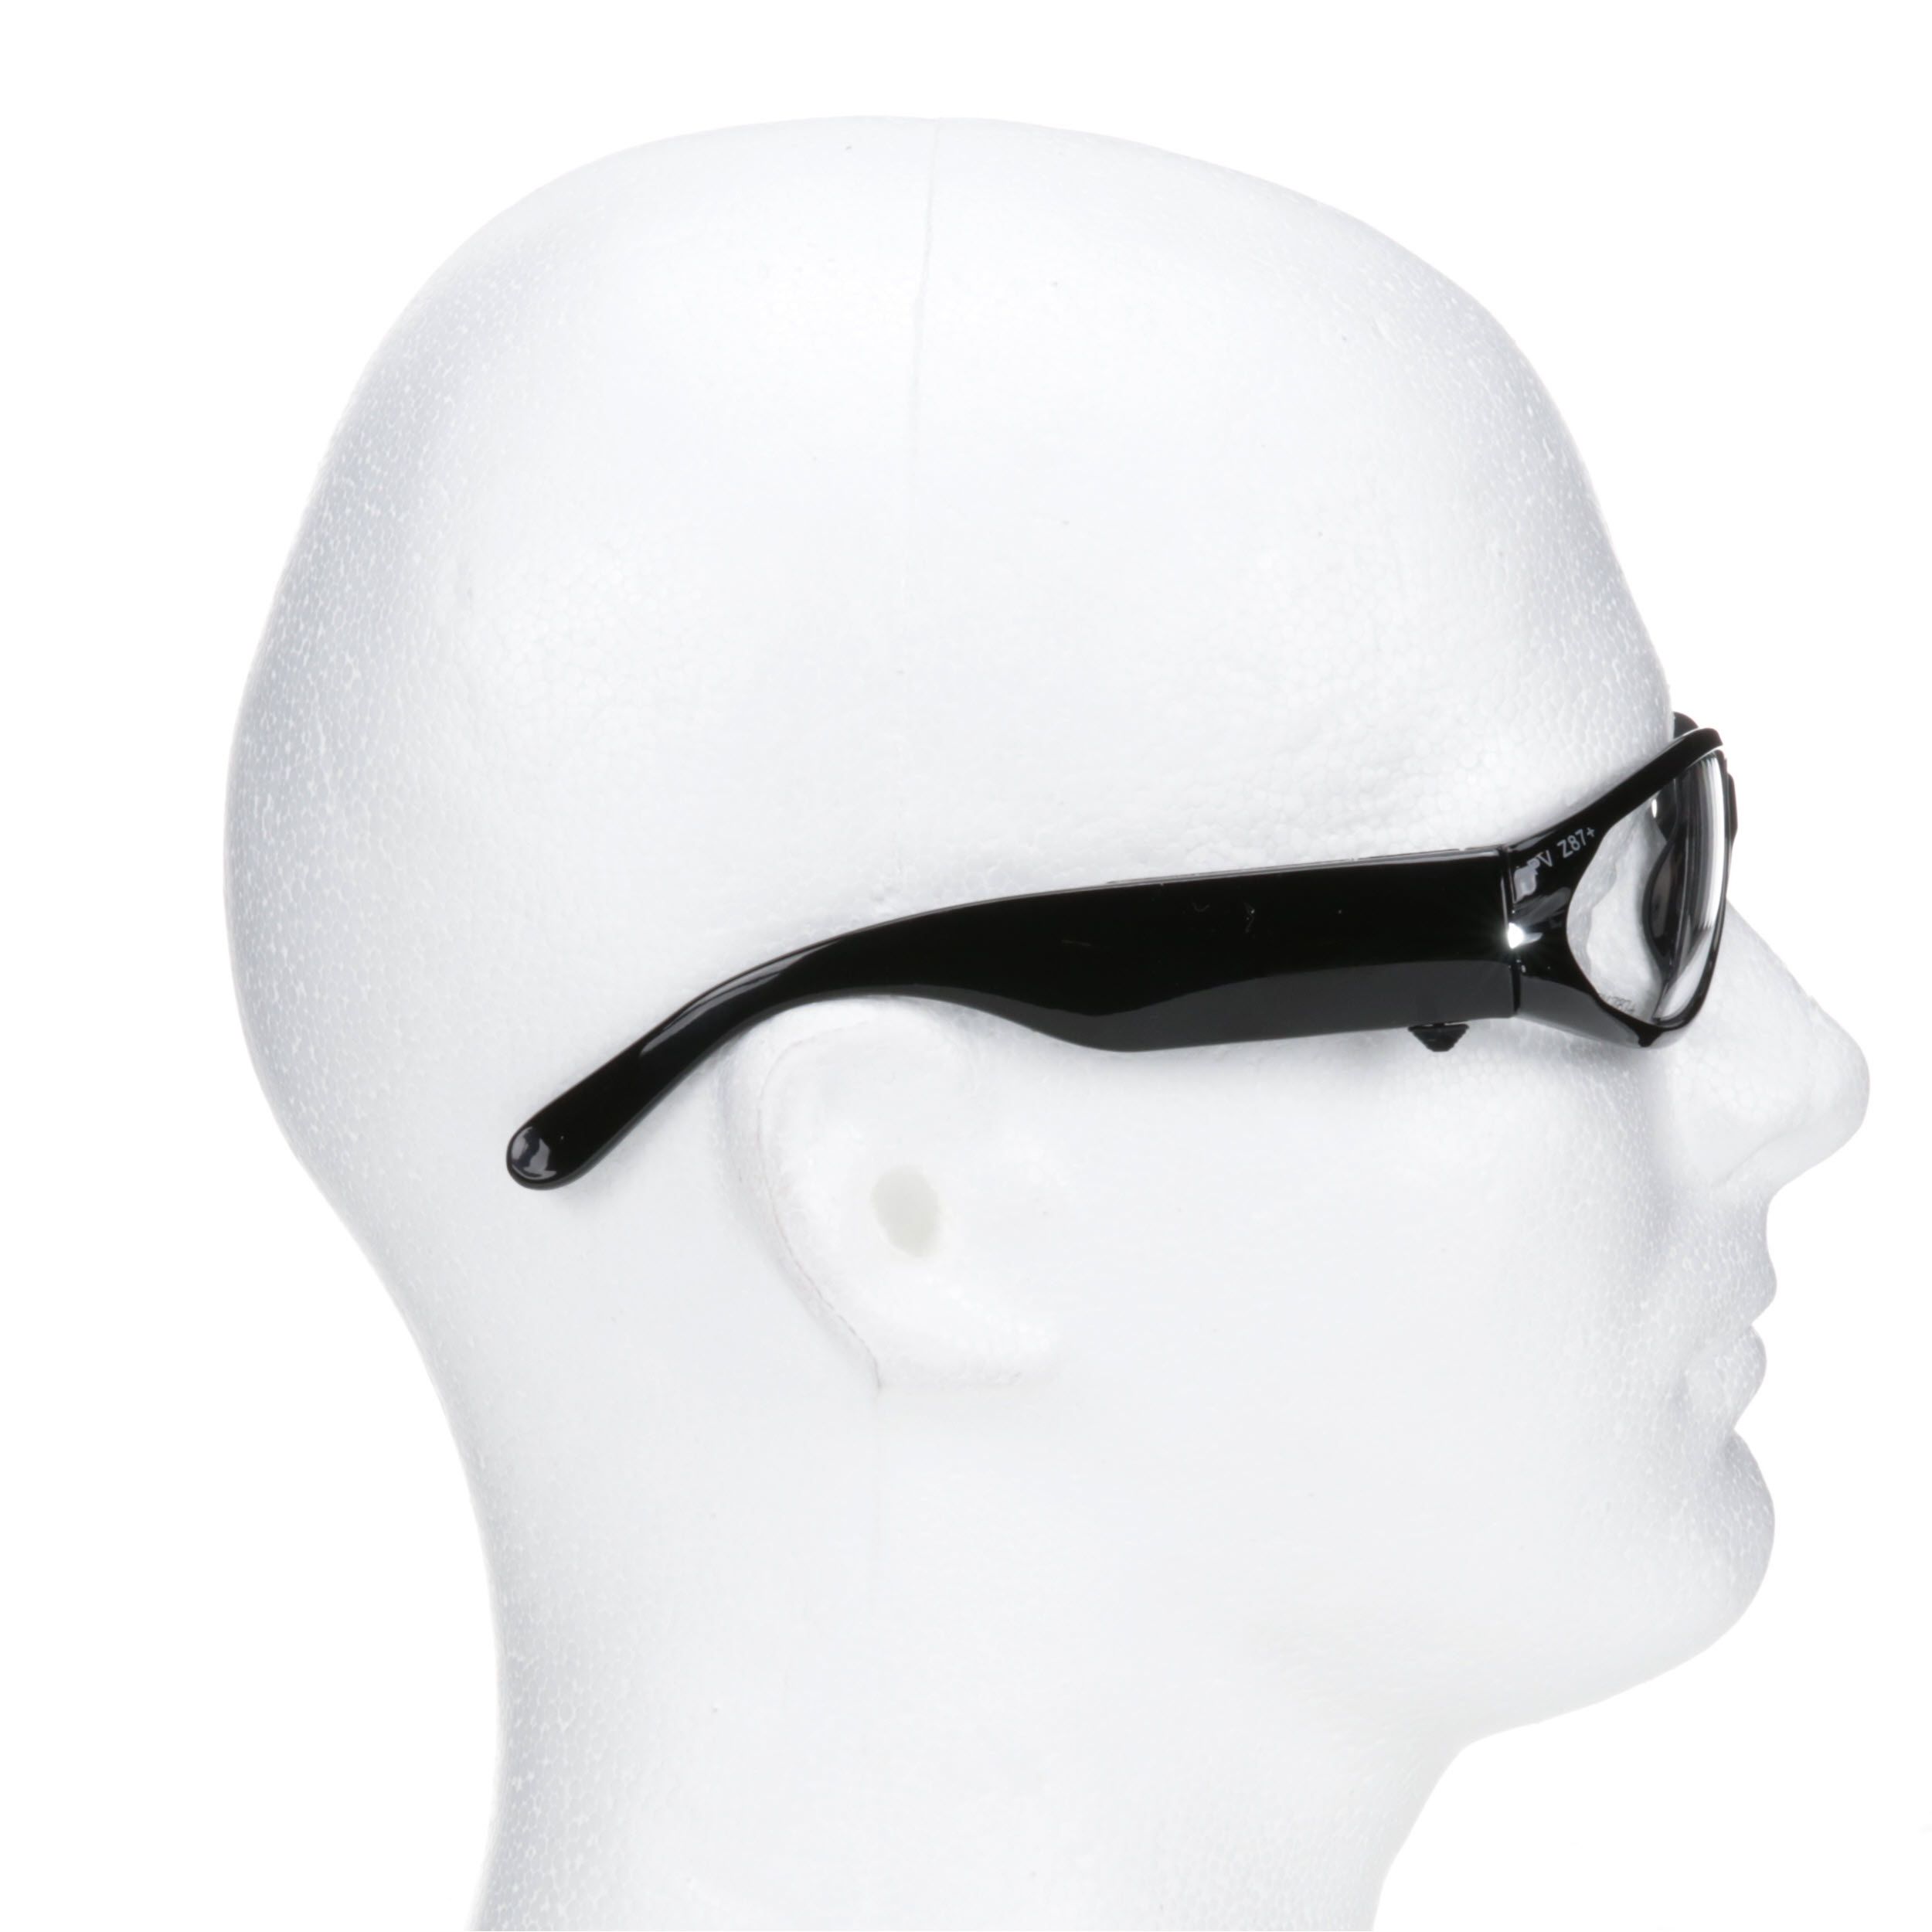 Light Specs Vindicator Lighted Safety Glasses LED Readers Safety Glasses with LED Lights AOLUNO Safety Glasses 